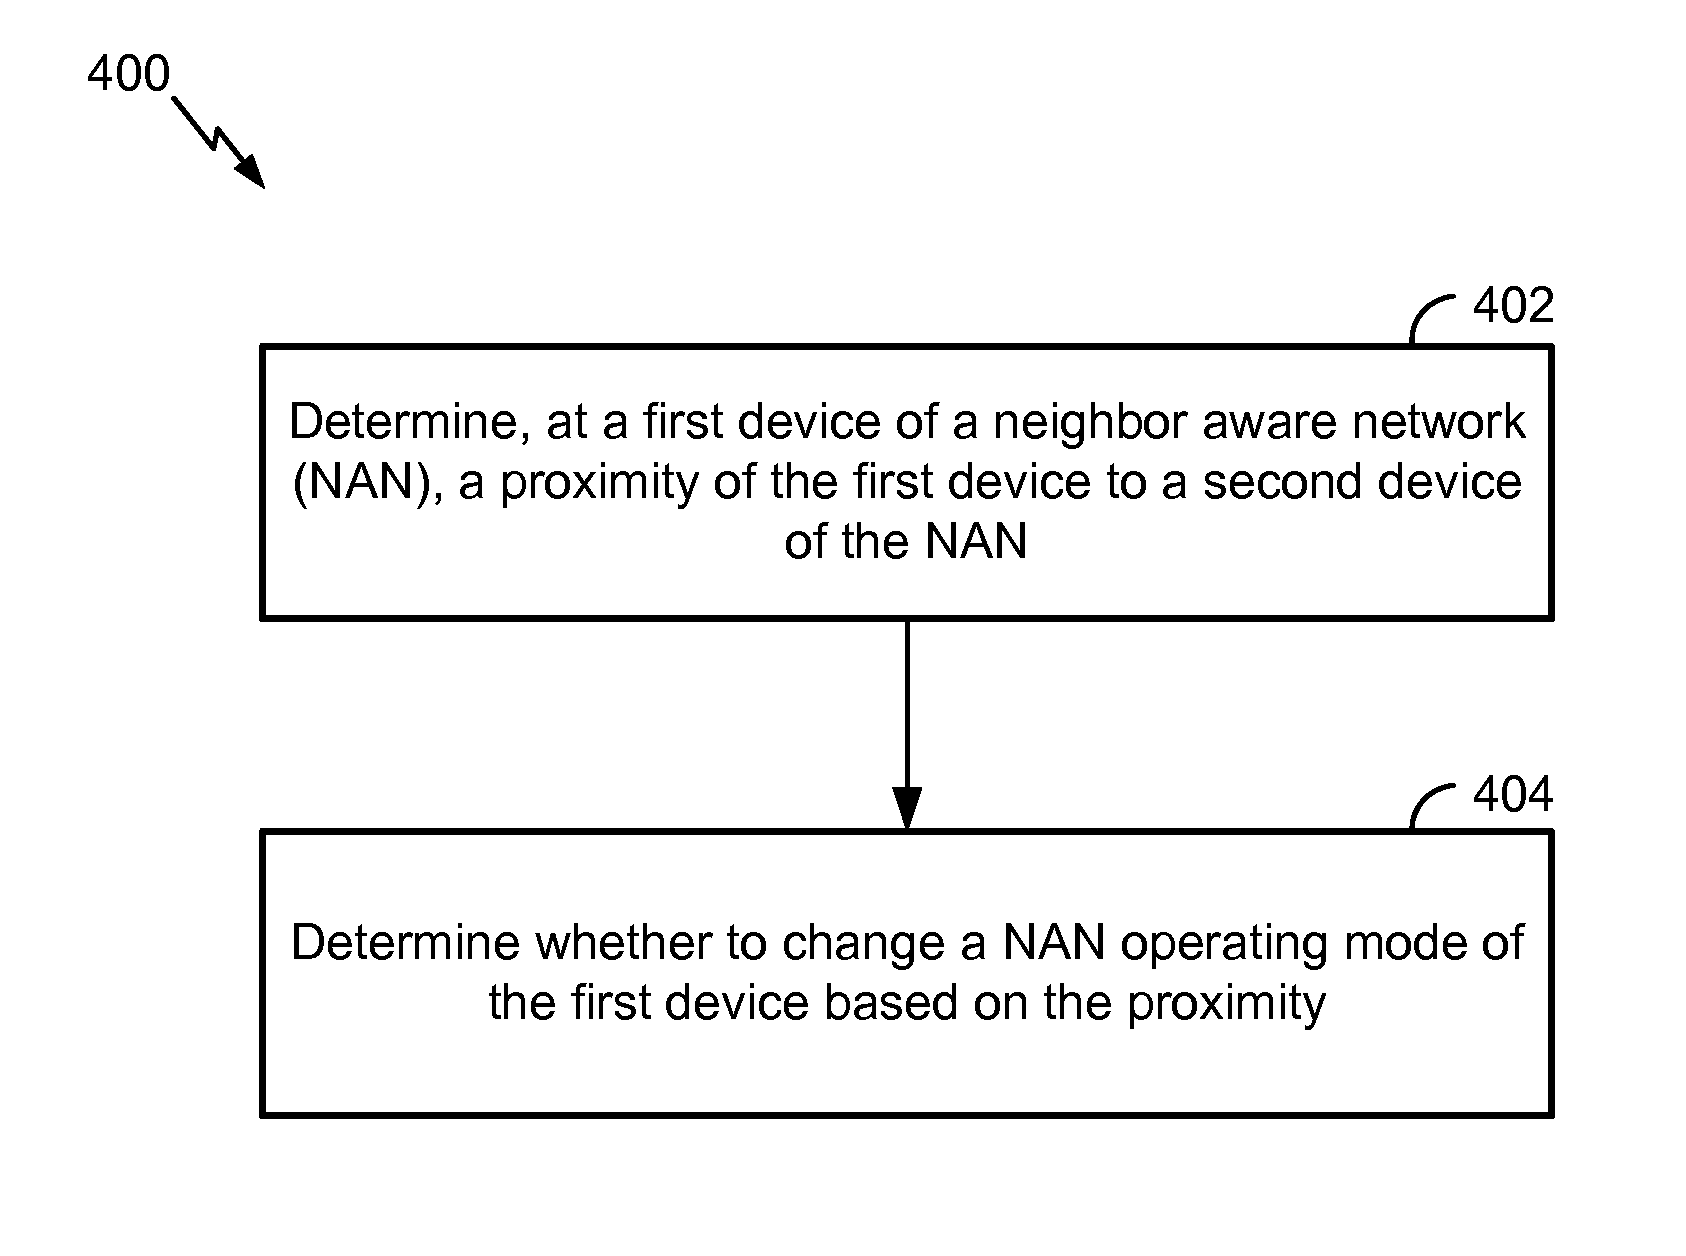 Neighbor aware network cluster topology establishment based on proximity measurements